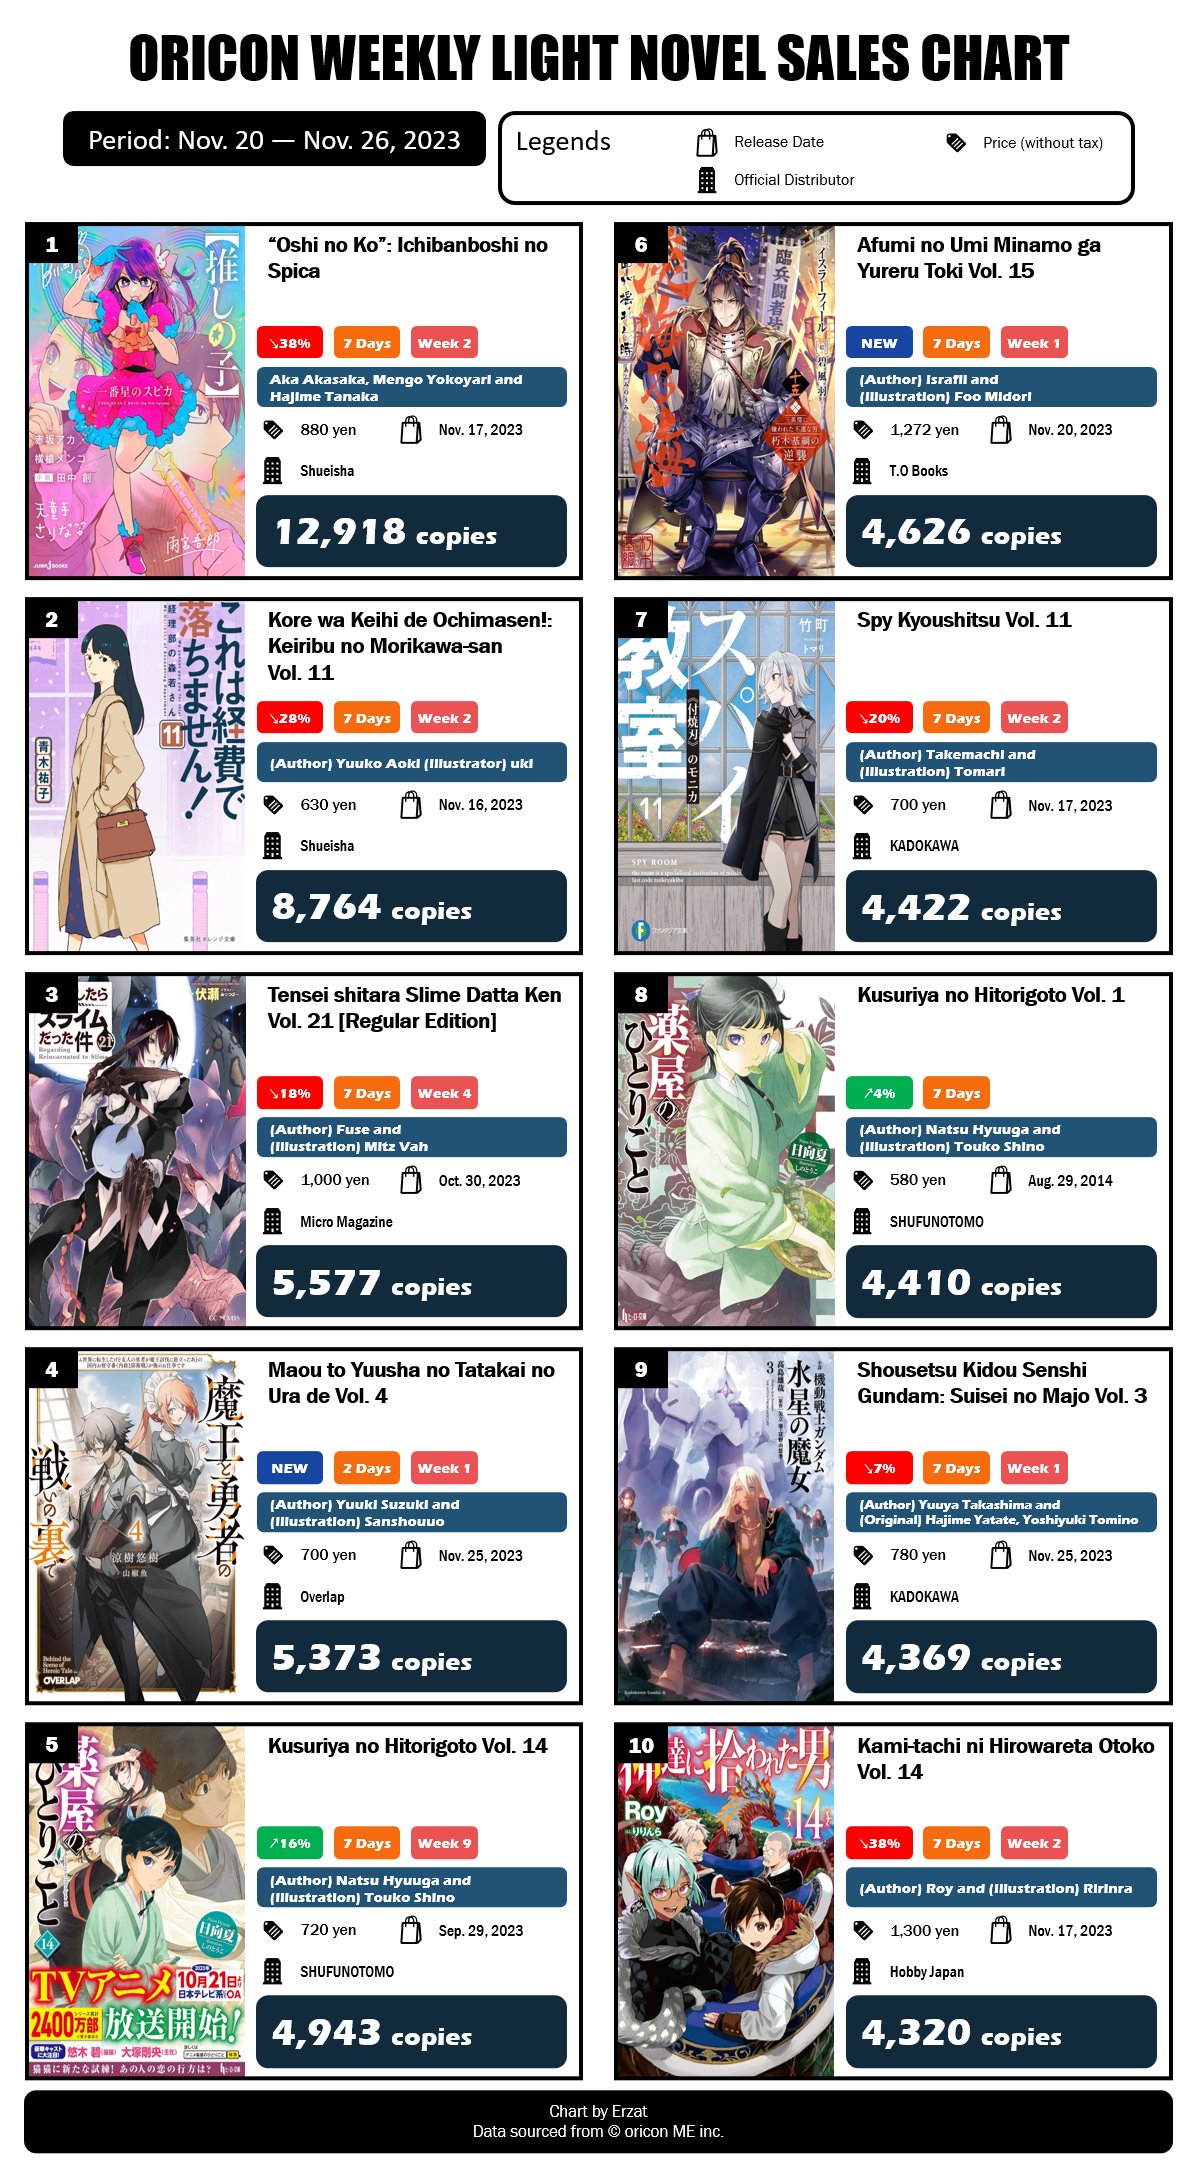 Japan Top 10 Weekly Anime Blu-ray and DVD Sales Ranking: December 19 –  December 25, 2022 - Erzat